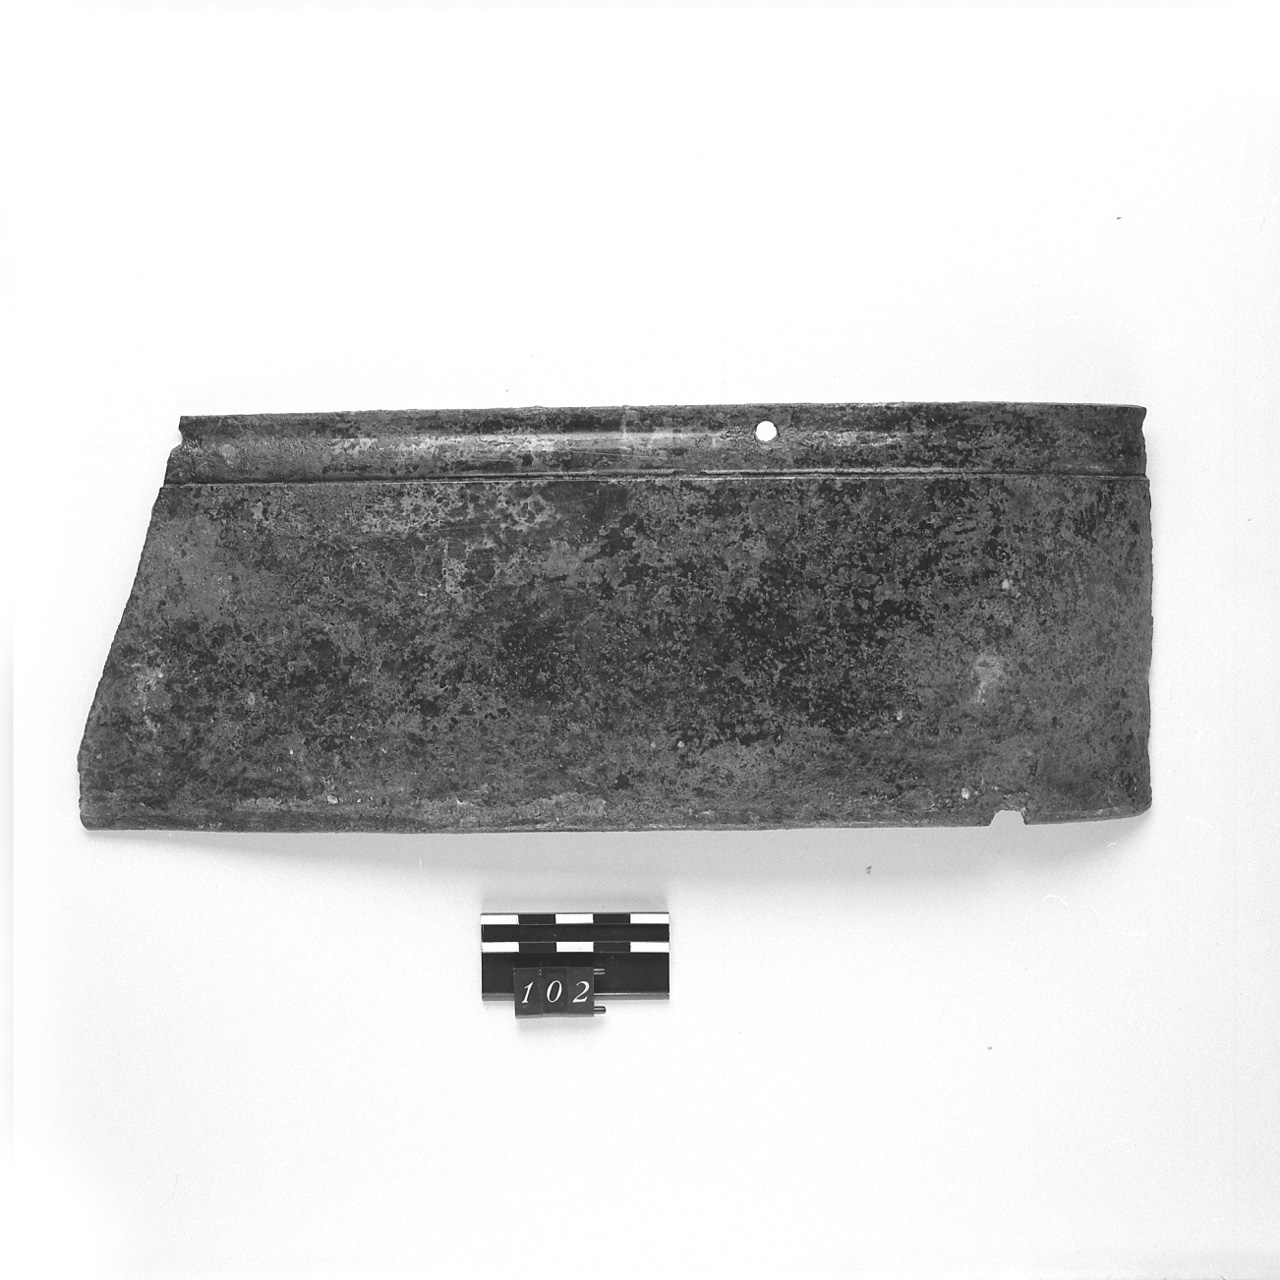 Cornice bronzea/ frammento (Epoca romana)